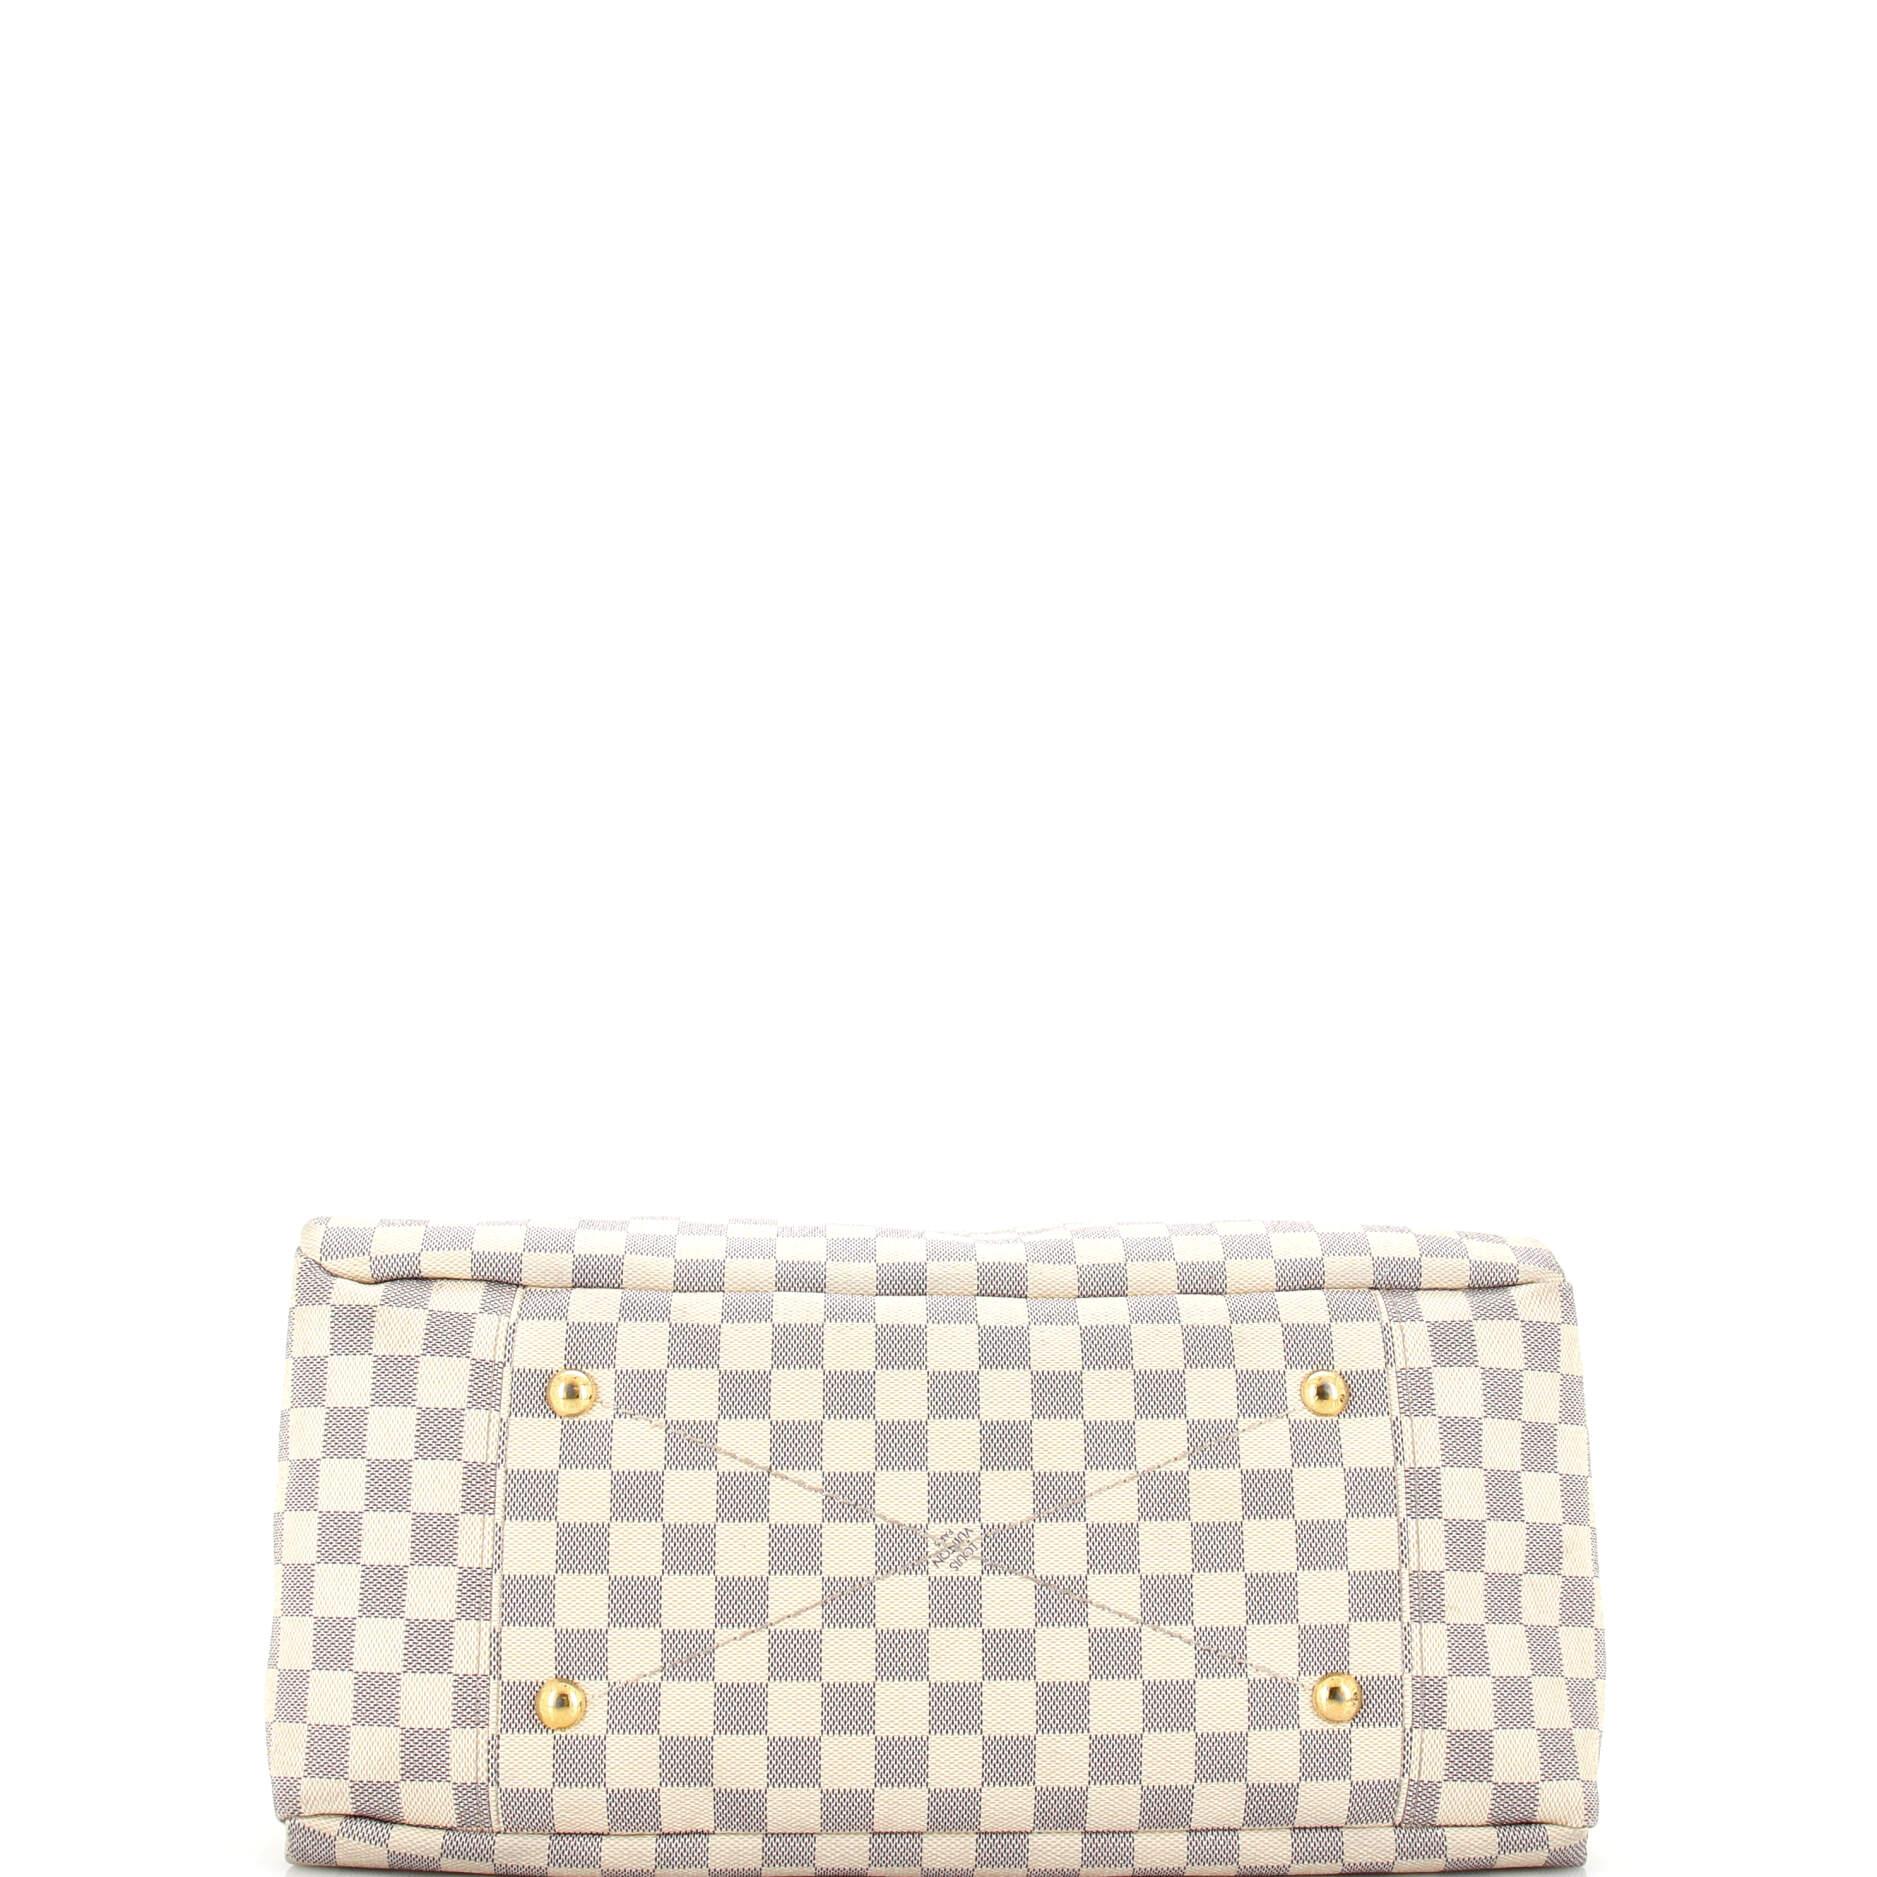 Women's or Men's Louis Vuitton Artsy Handbag Damier MM